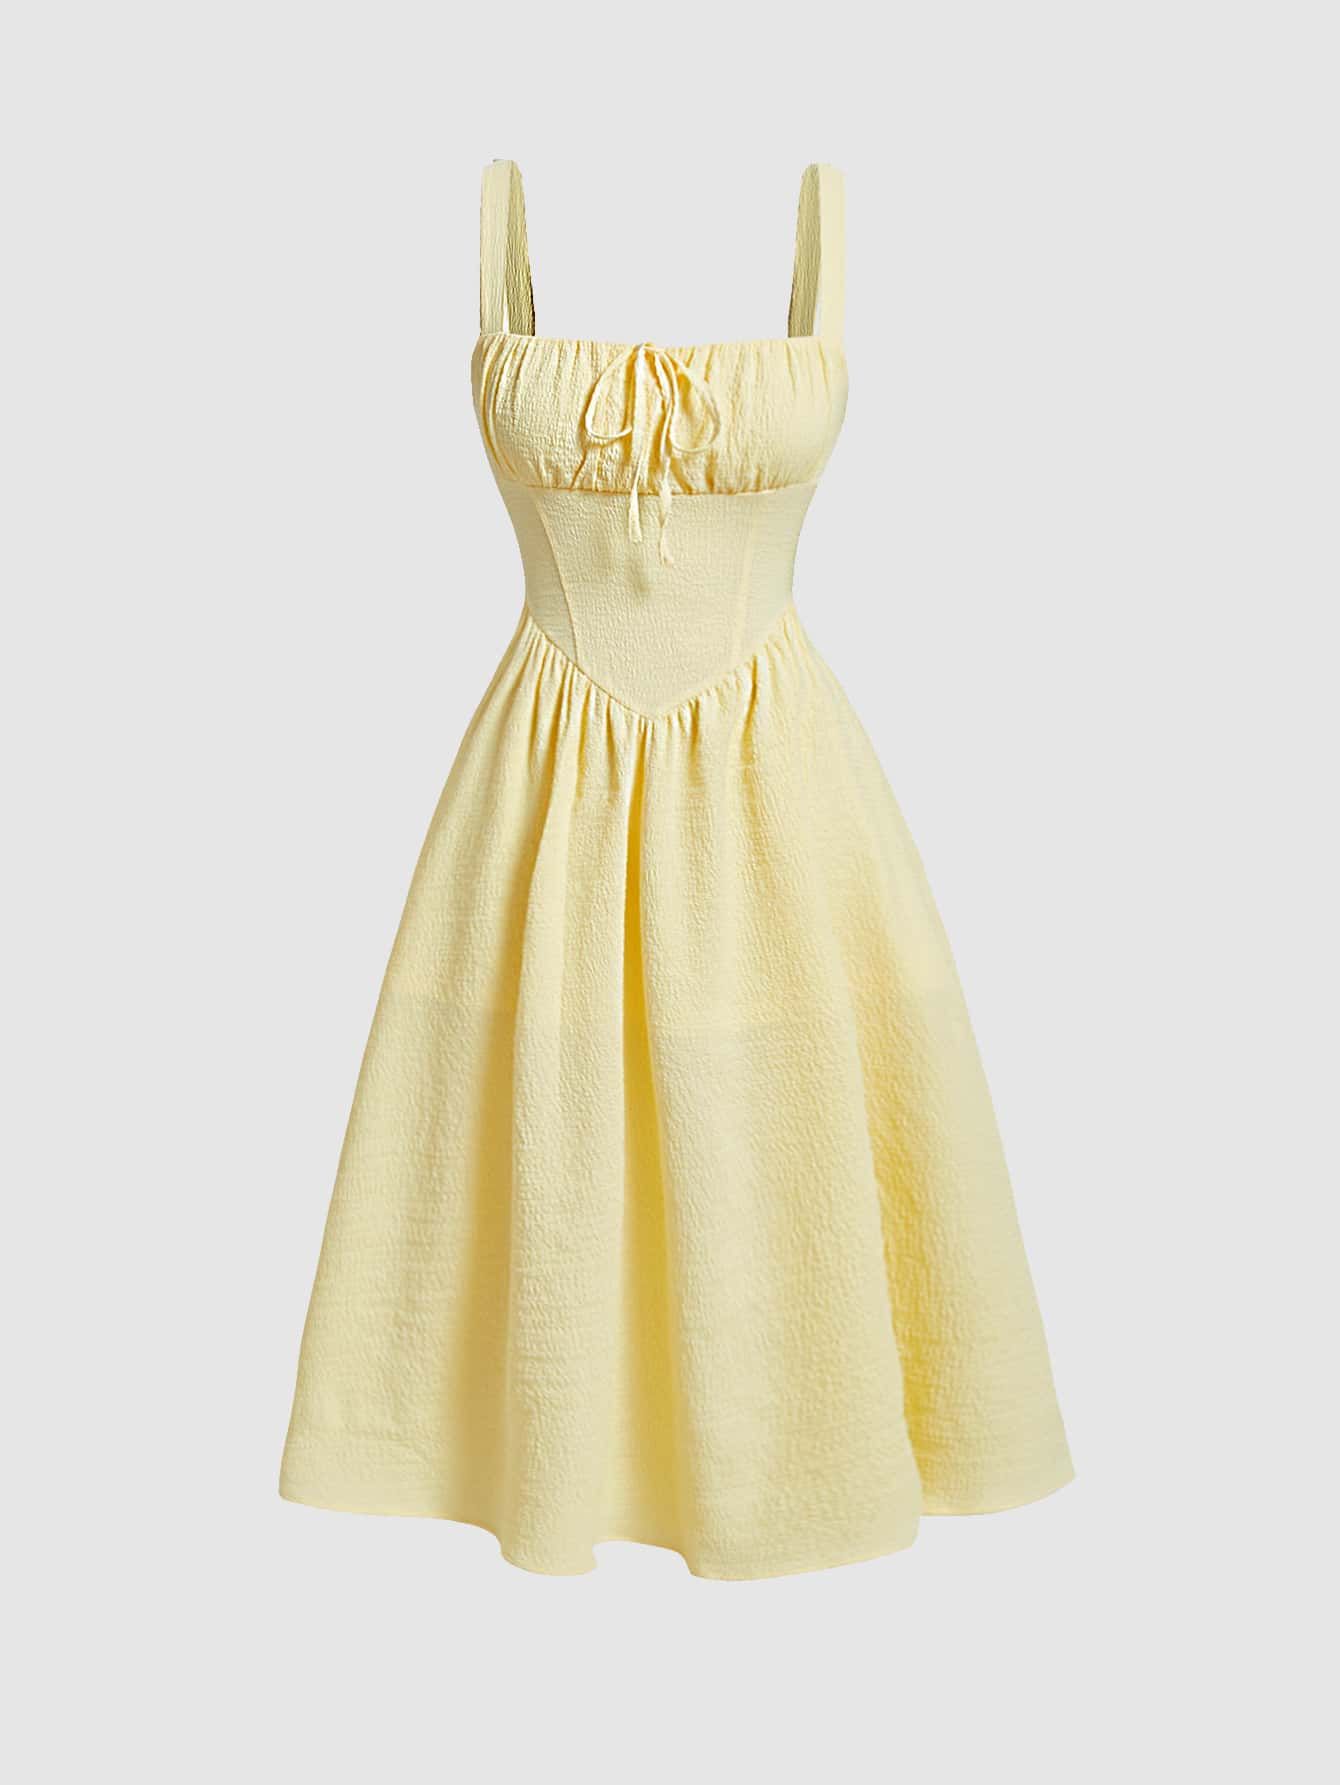 Sunshine Style: Embrace Warmth in a Stylish Yellow Dress